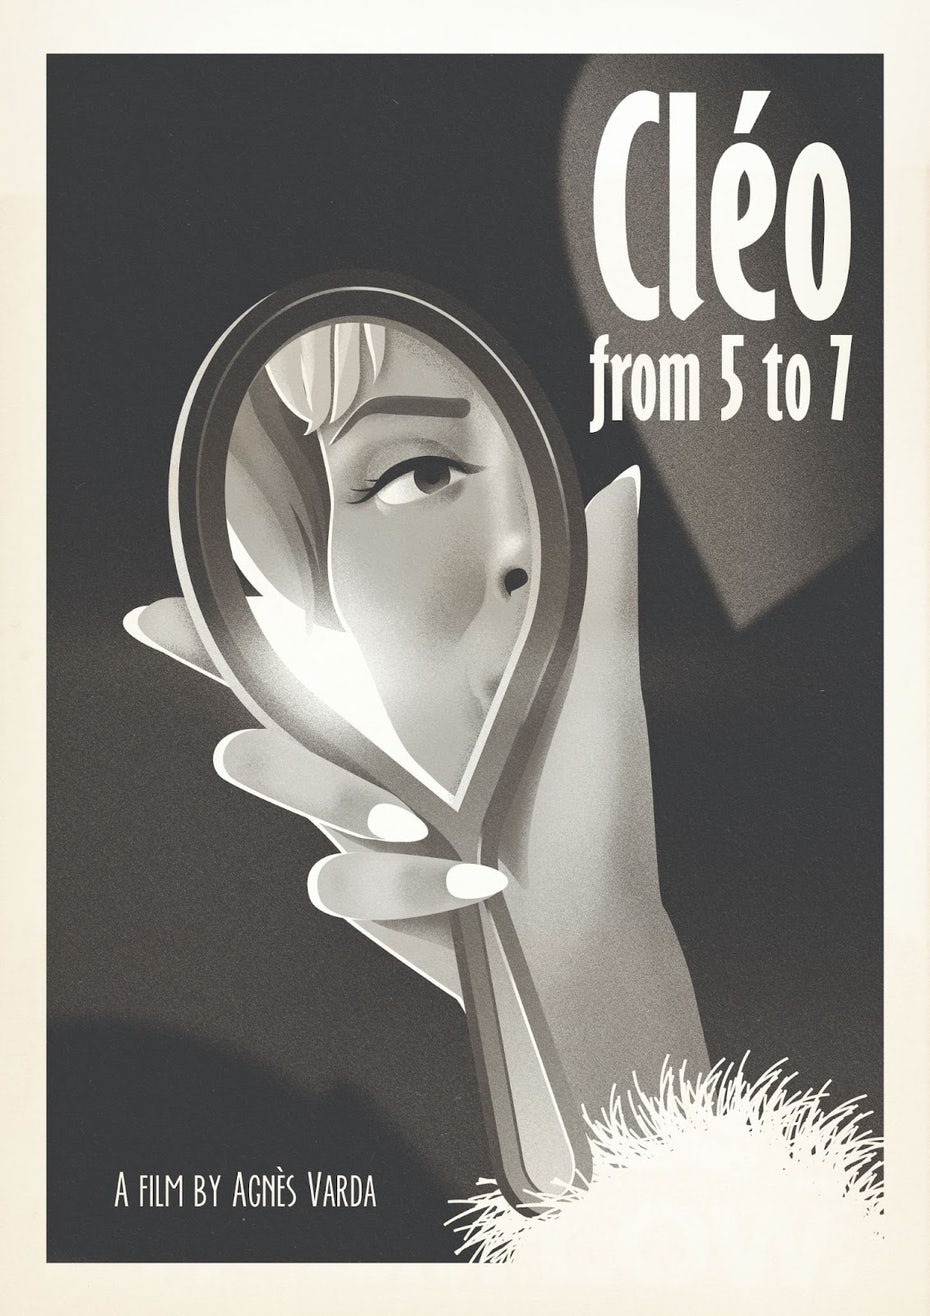  Плакат Cleo от 5 до 7 "width =" 1131 "height =" 1600 